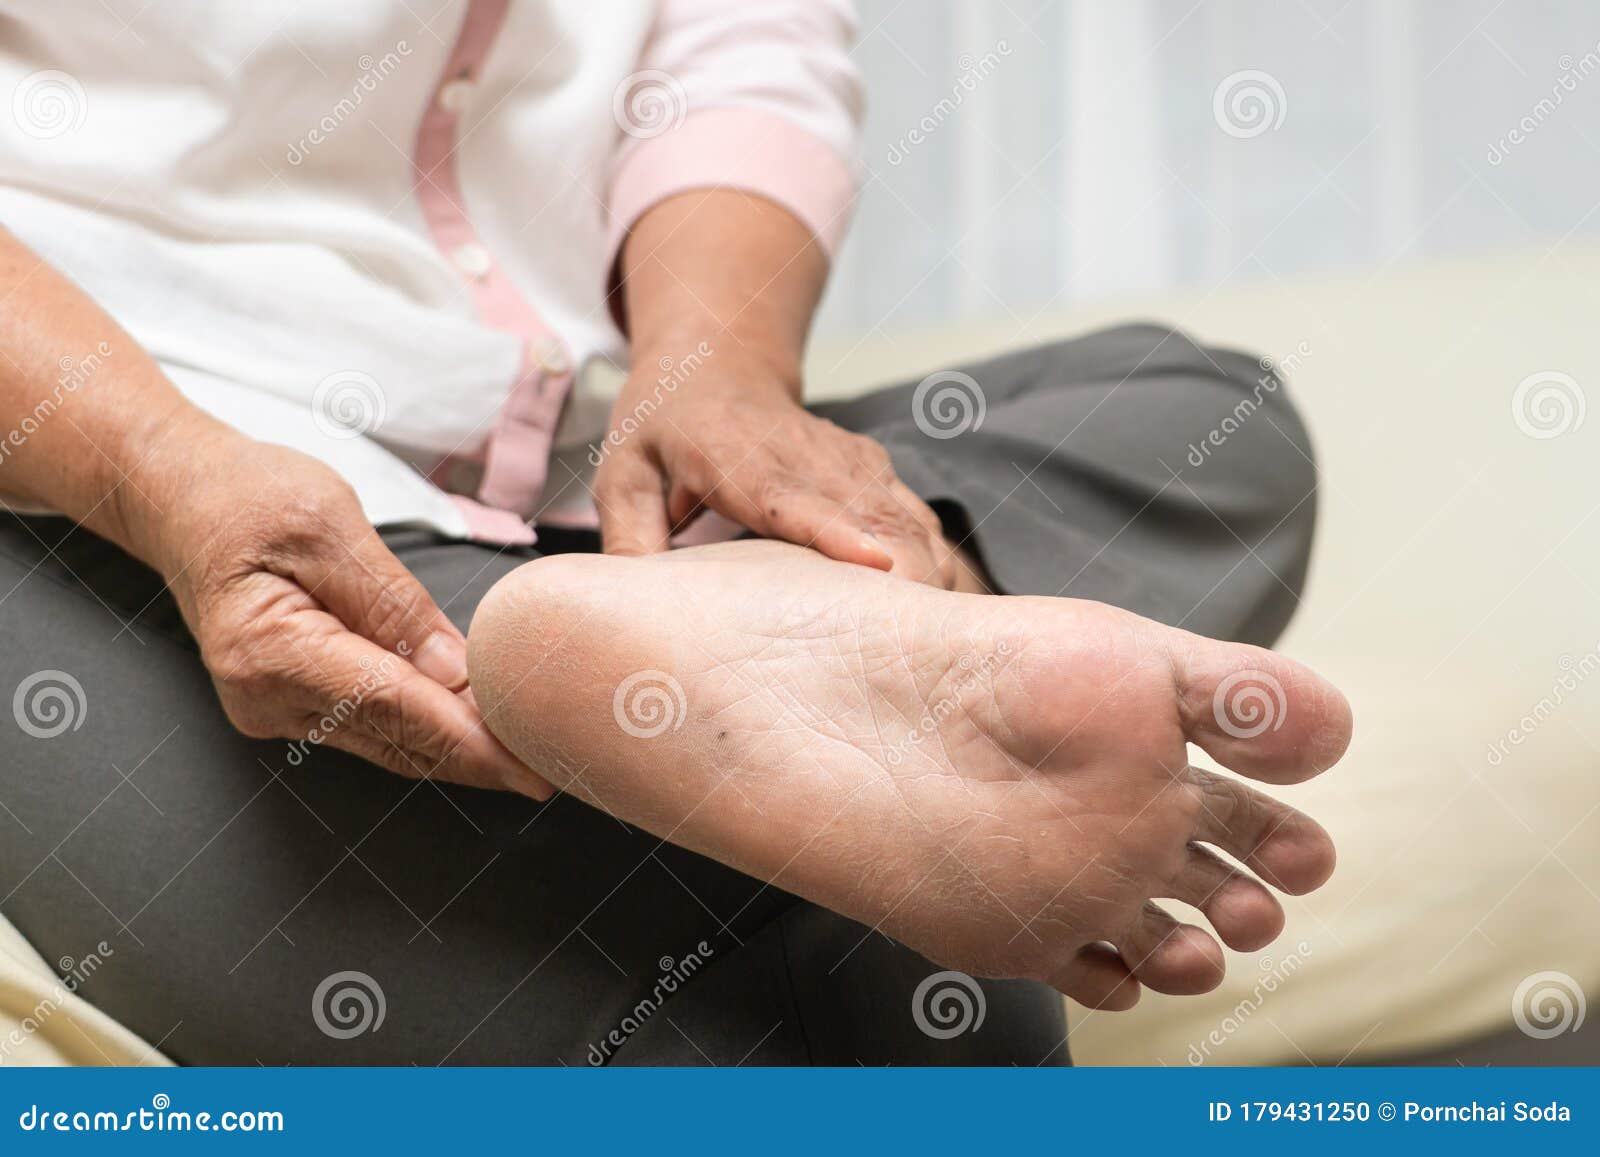 dry skin and cornea on senior woman foot